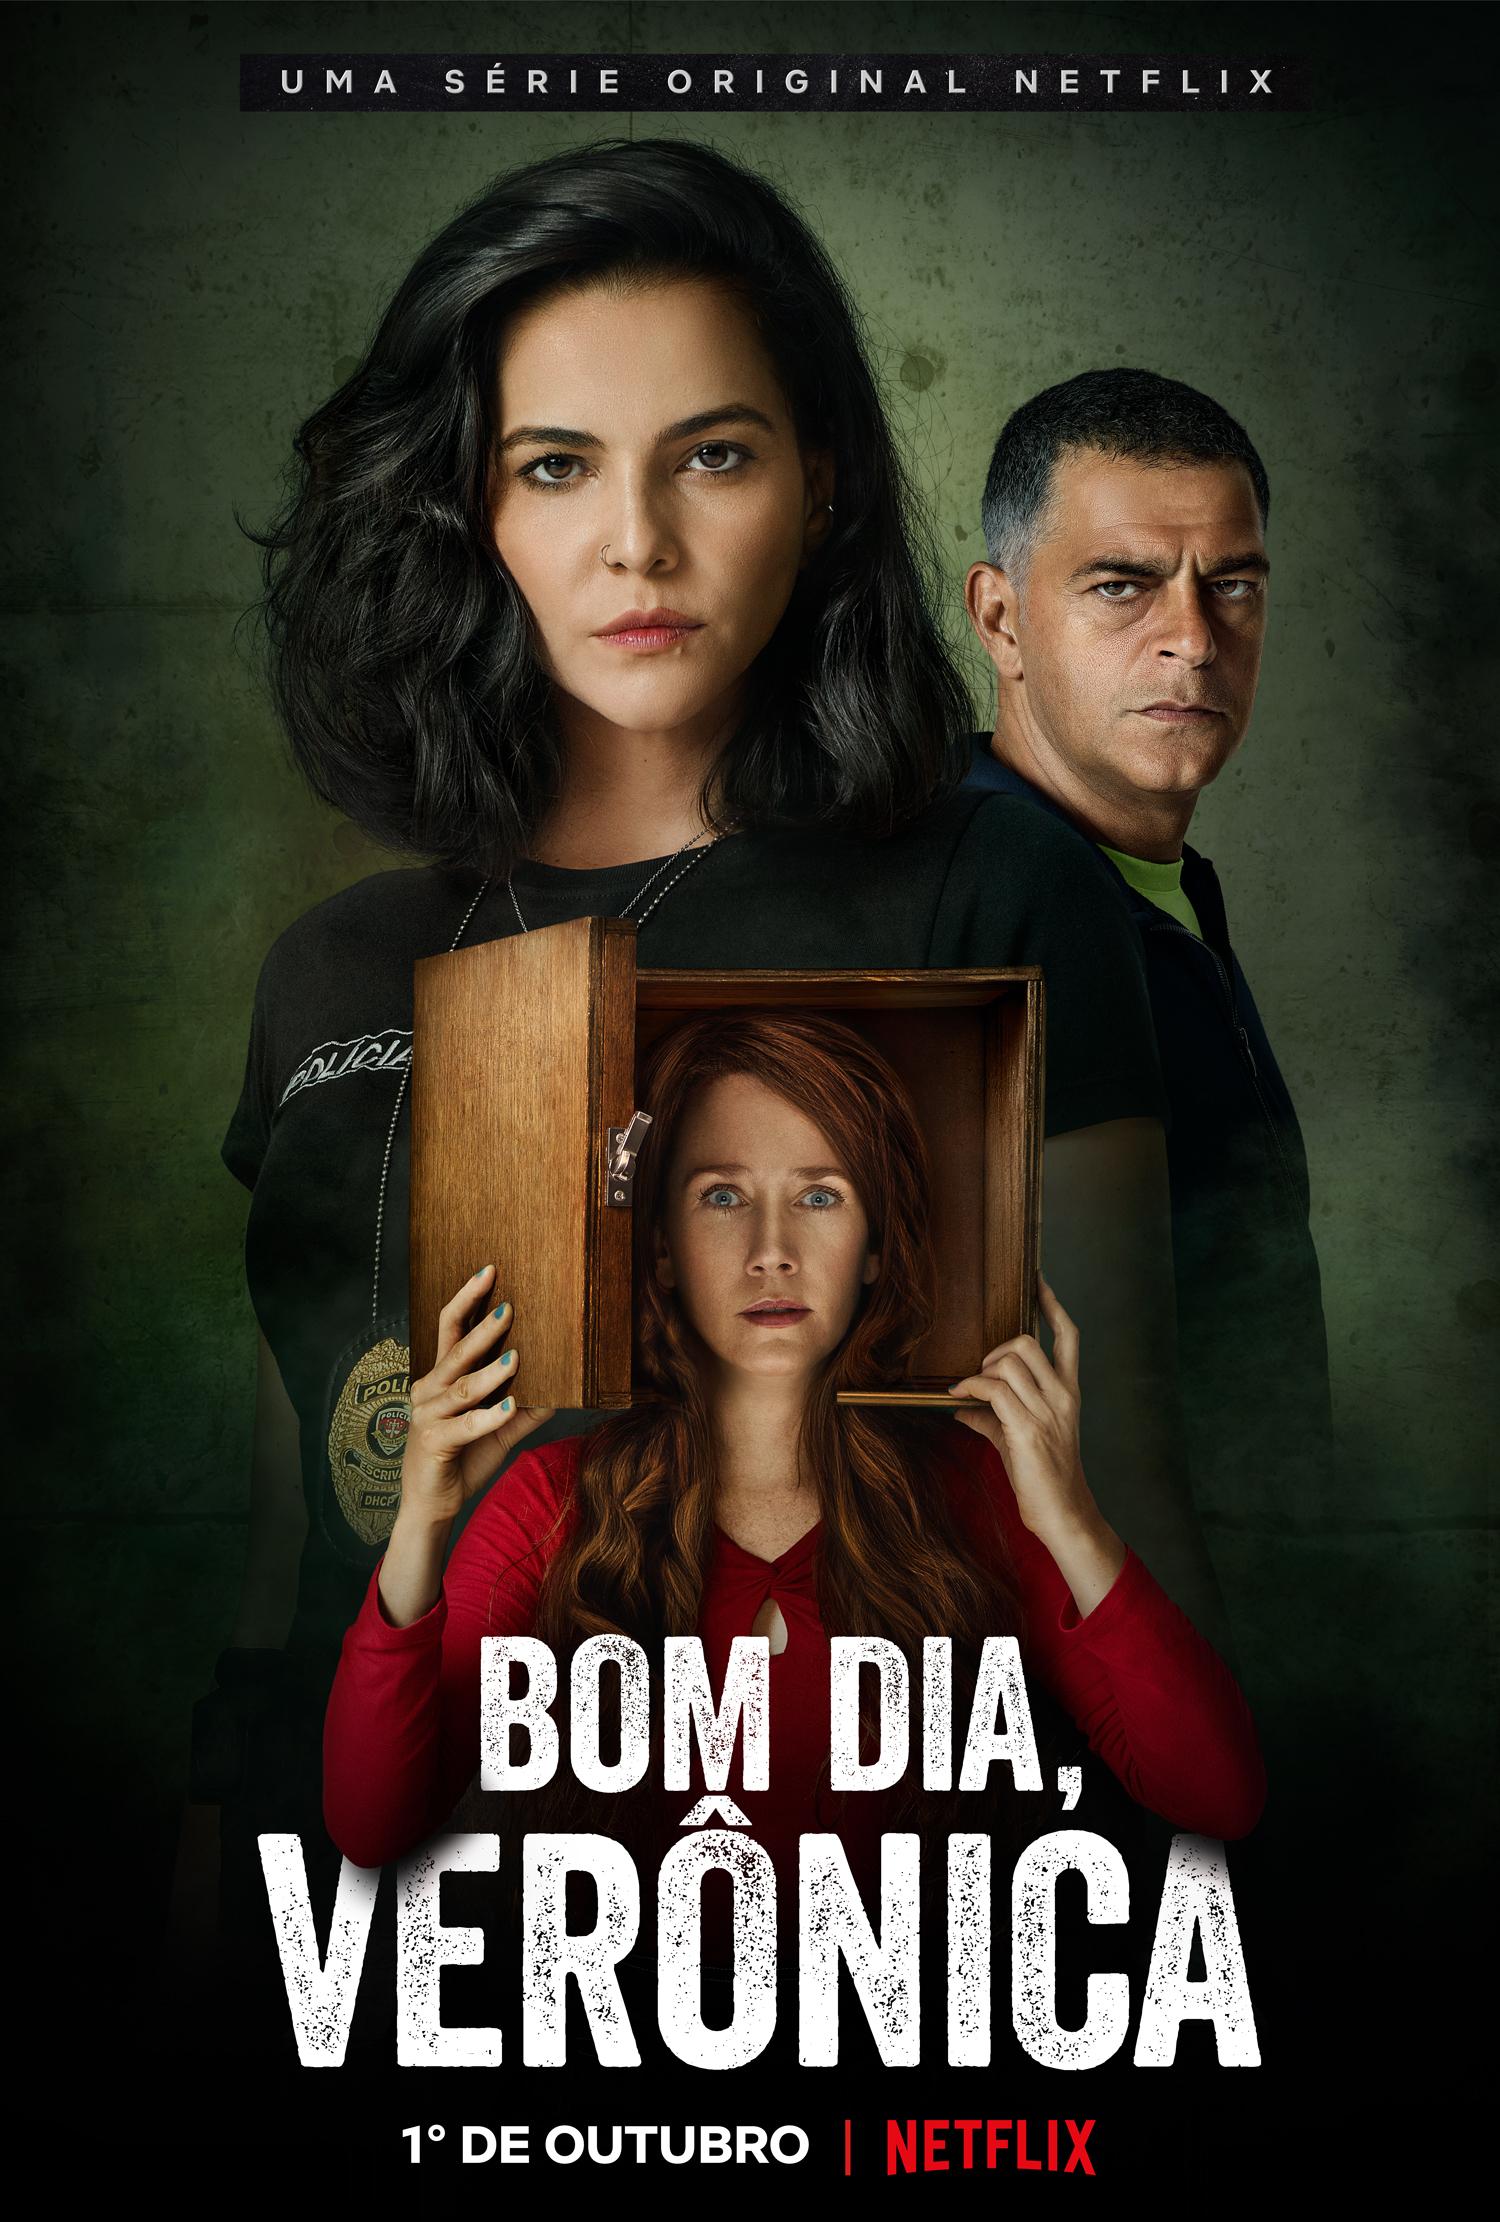 Good Morning, Verônica season 3 (February 14) - Streaming on NetflixIn the third and final season of 